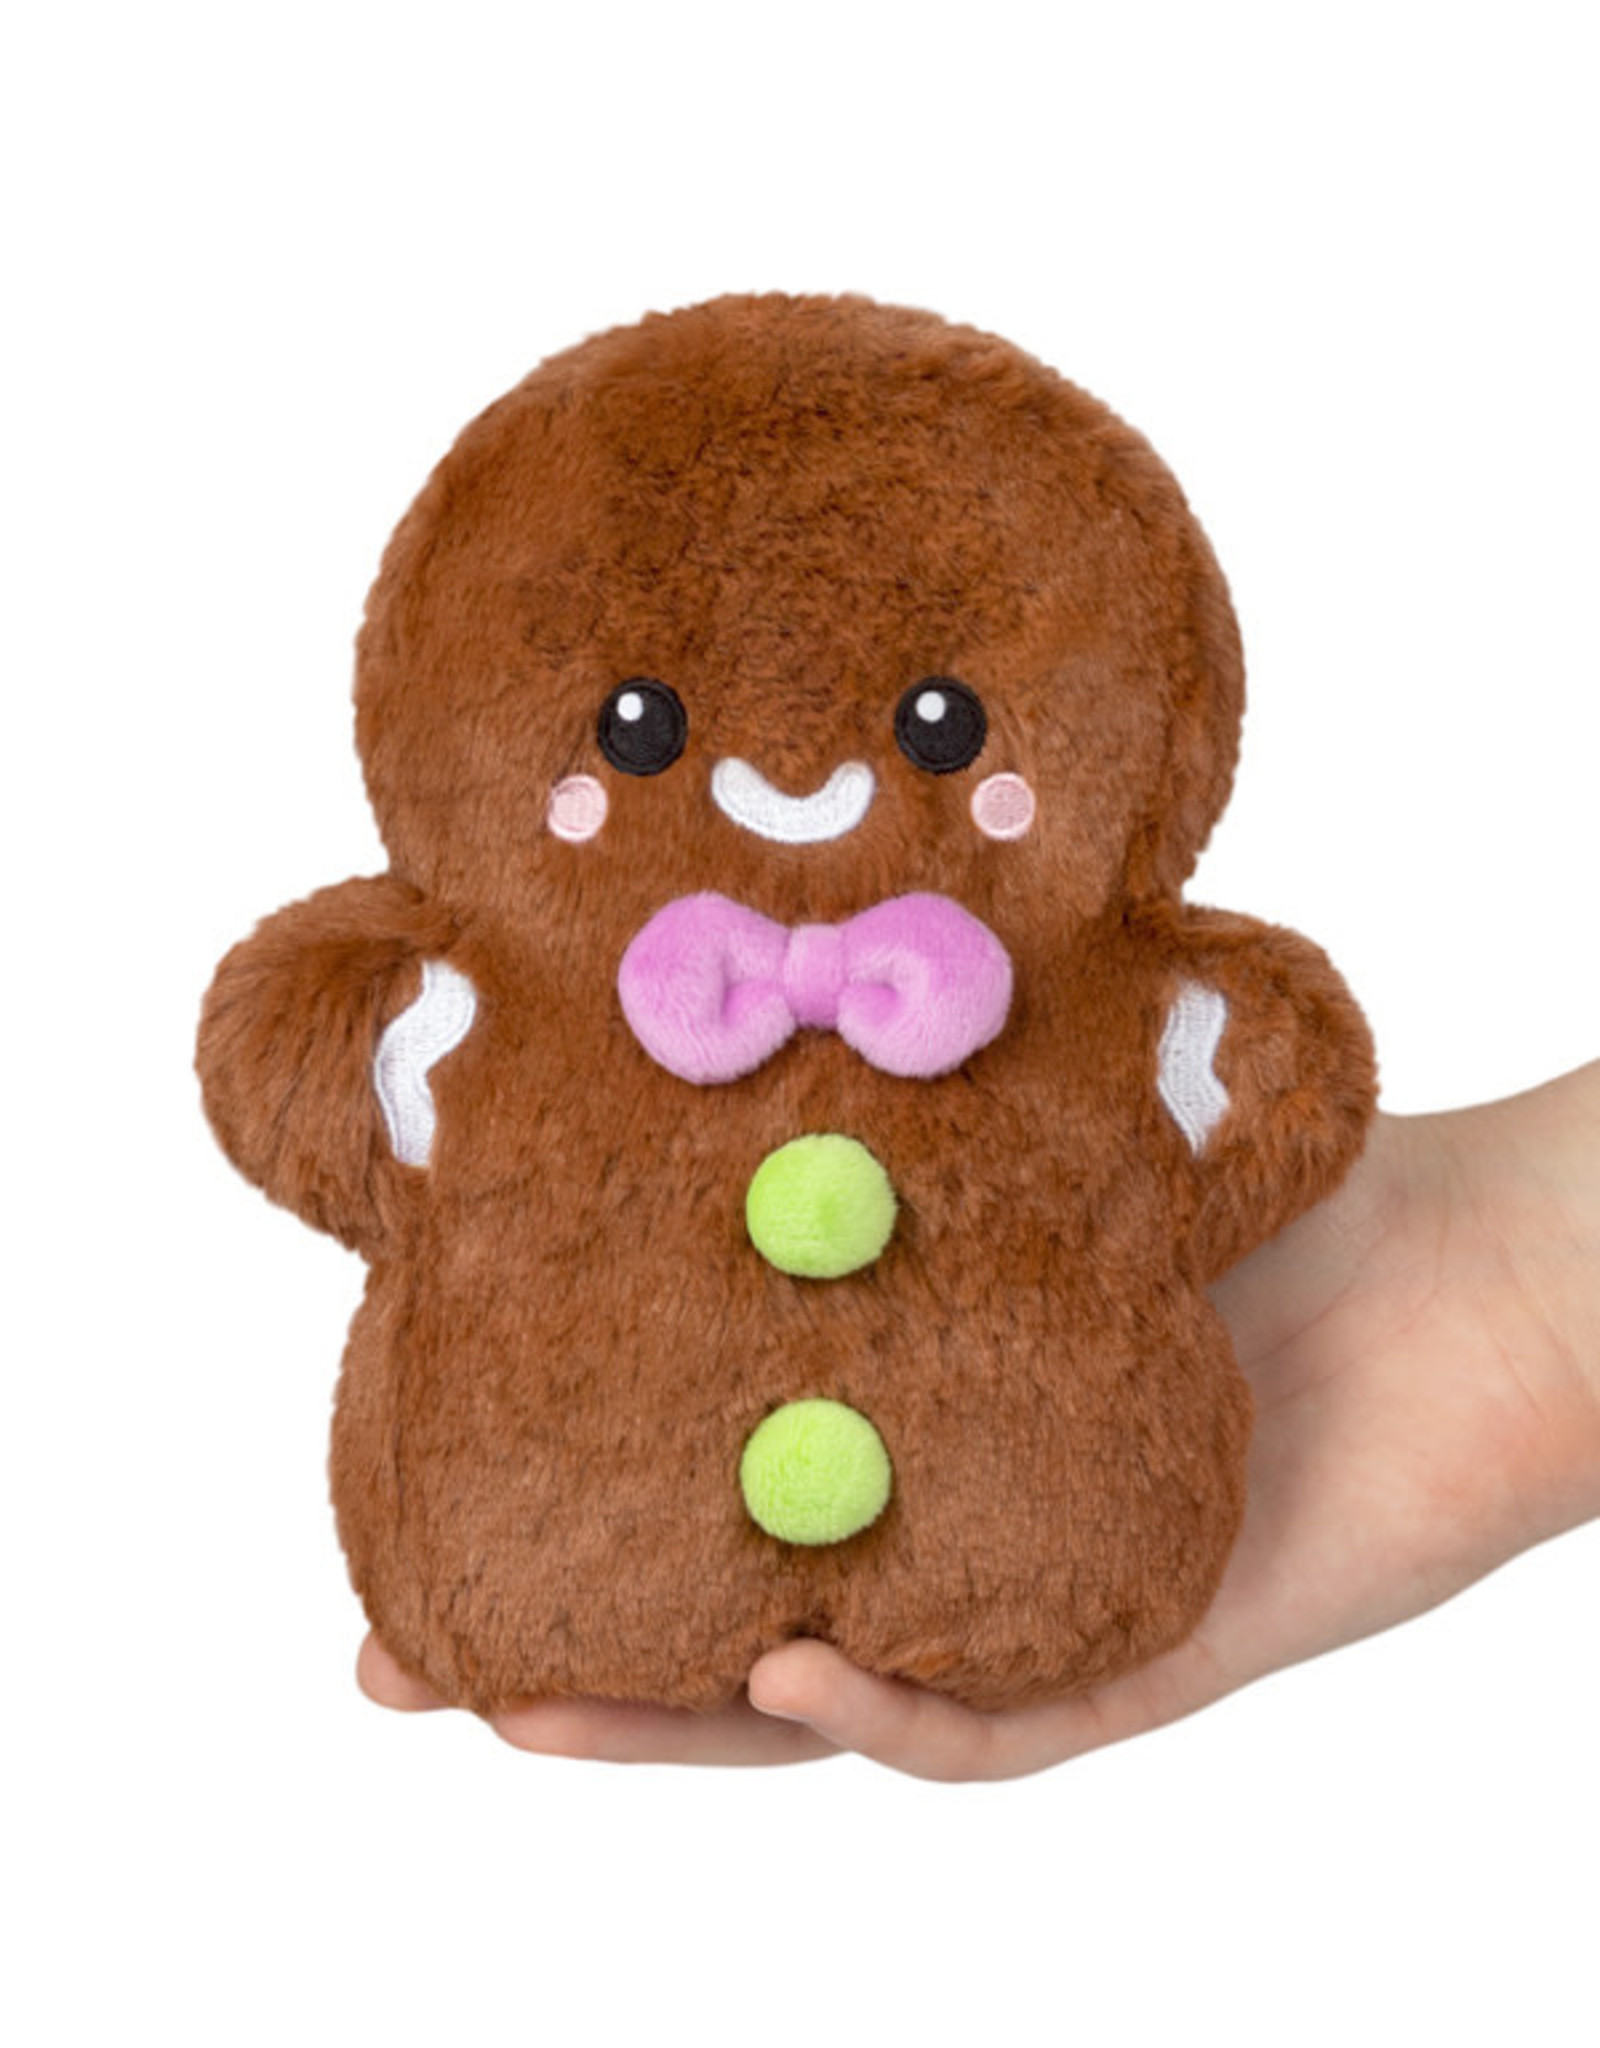 Snugglemi Snackers Gingerbread Man